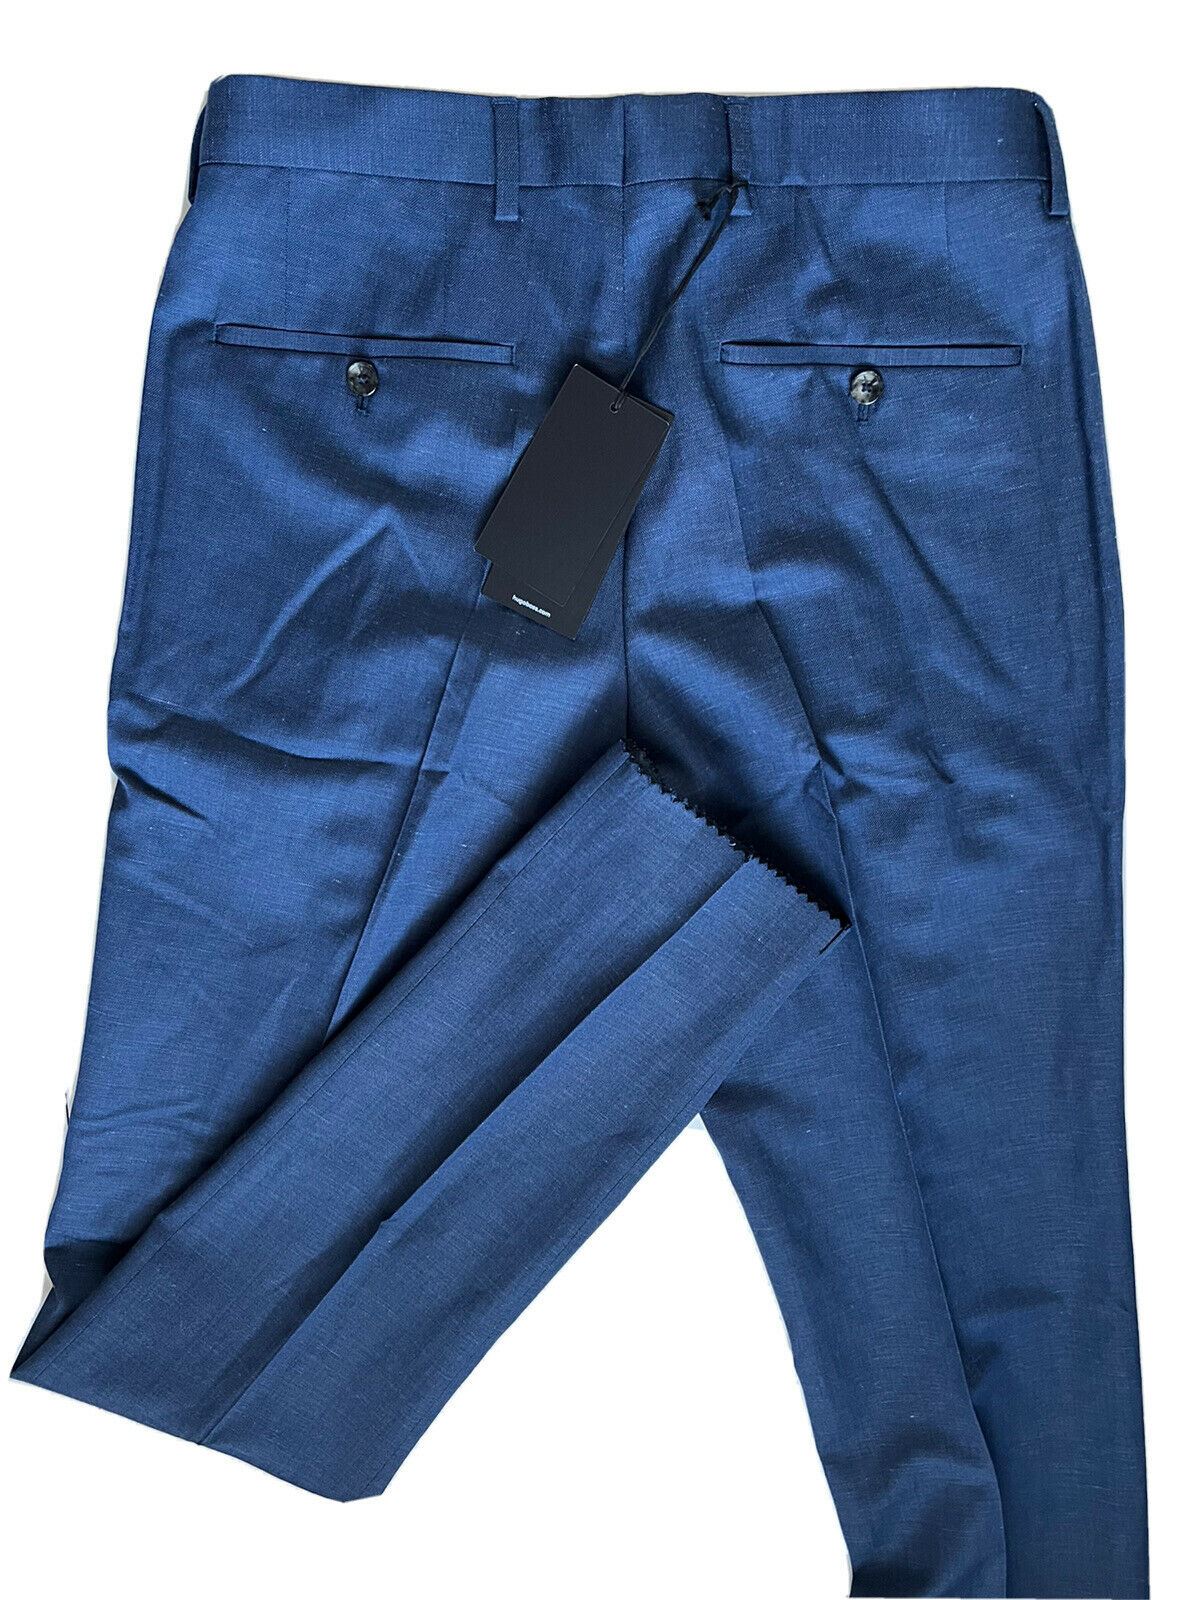 NWT $245 Boss Hugo Boss Genesis4 Men's Wool/Linen Blue Dress Pants Size 30 US